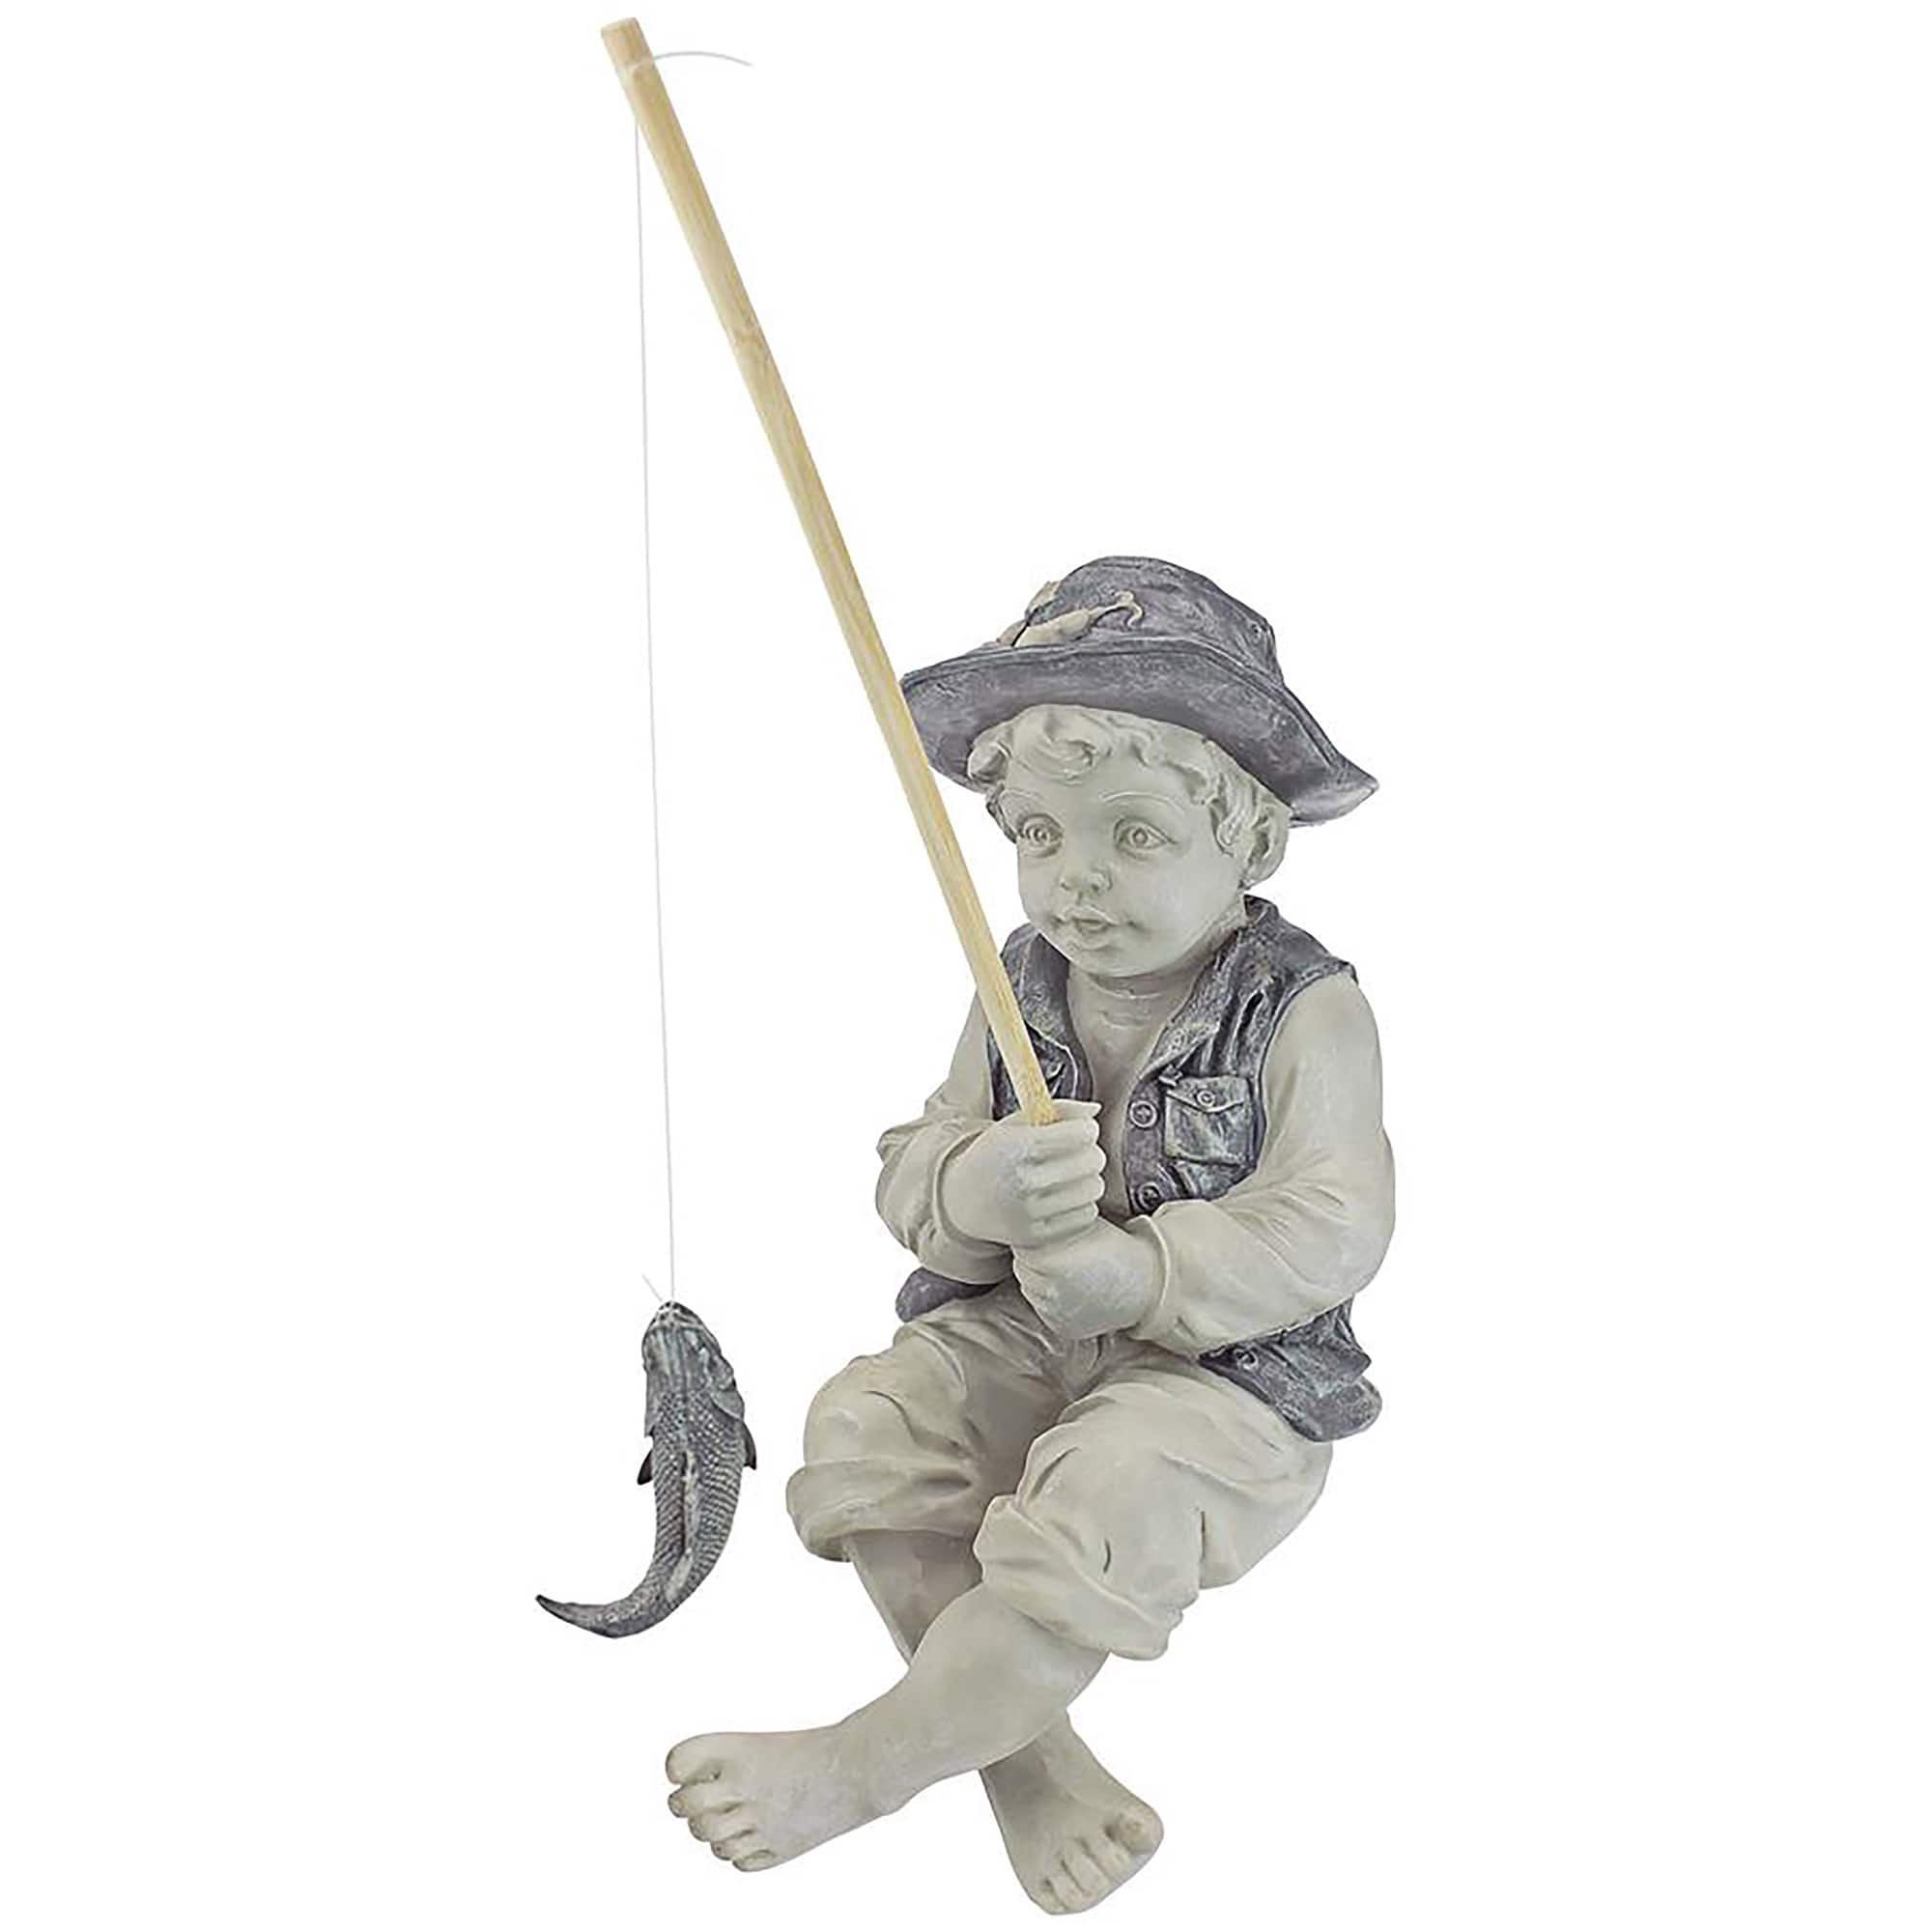 Frederic the Little Fisherman of Avignon Statue